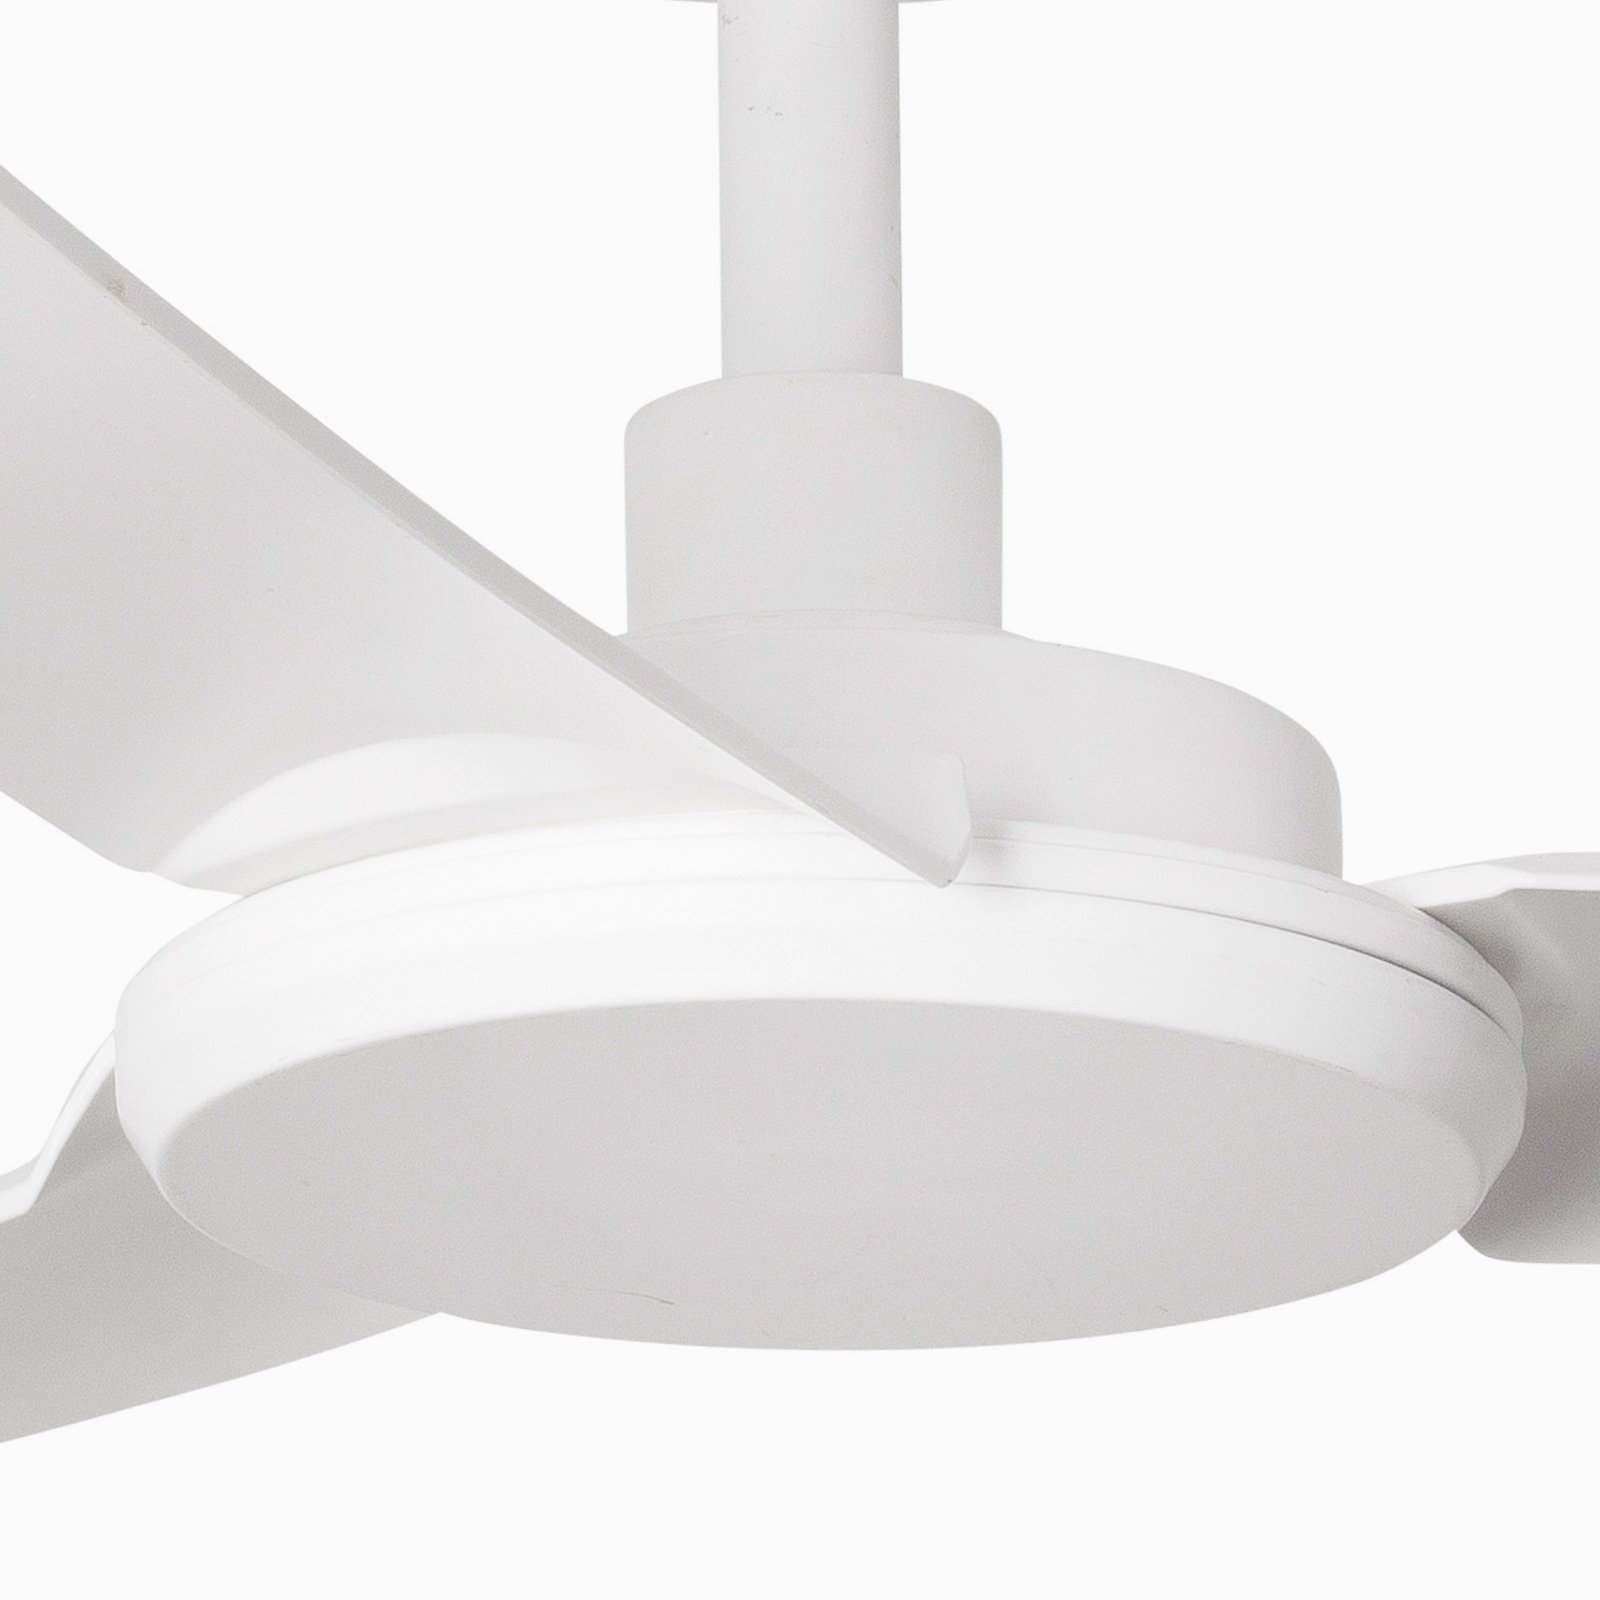 Siros L ceiling fan, DC, 3 blades, white